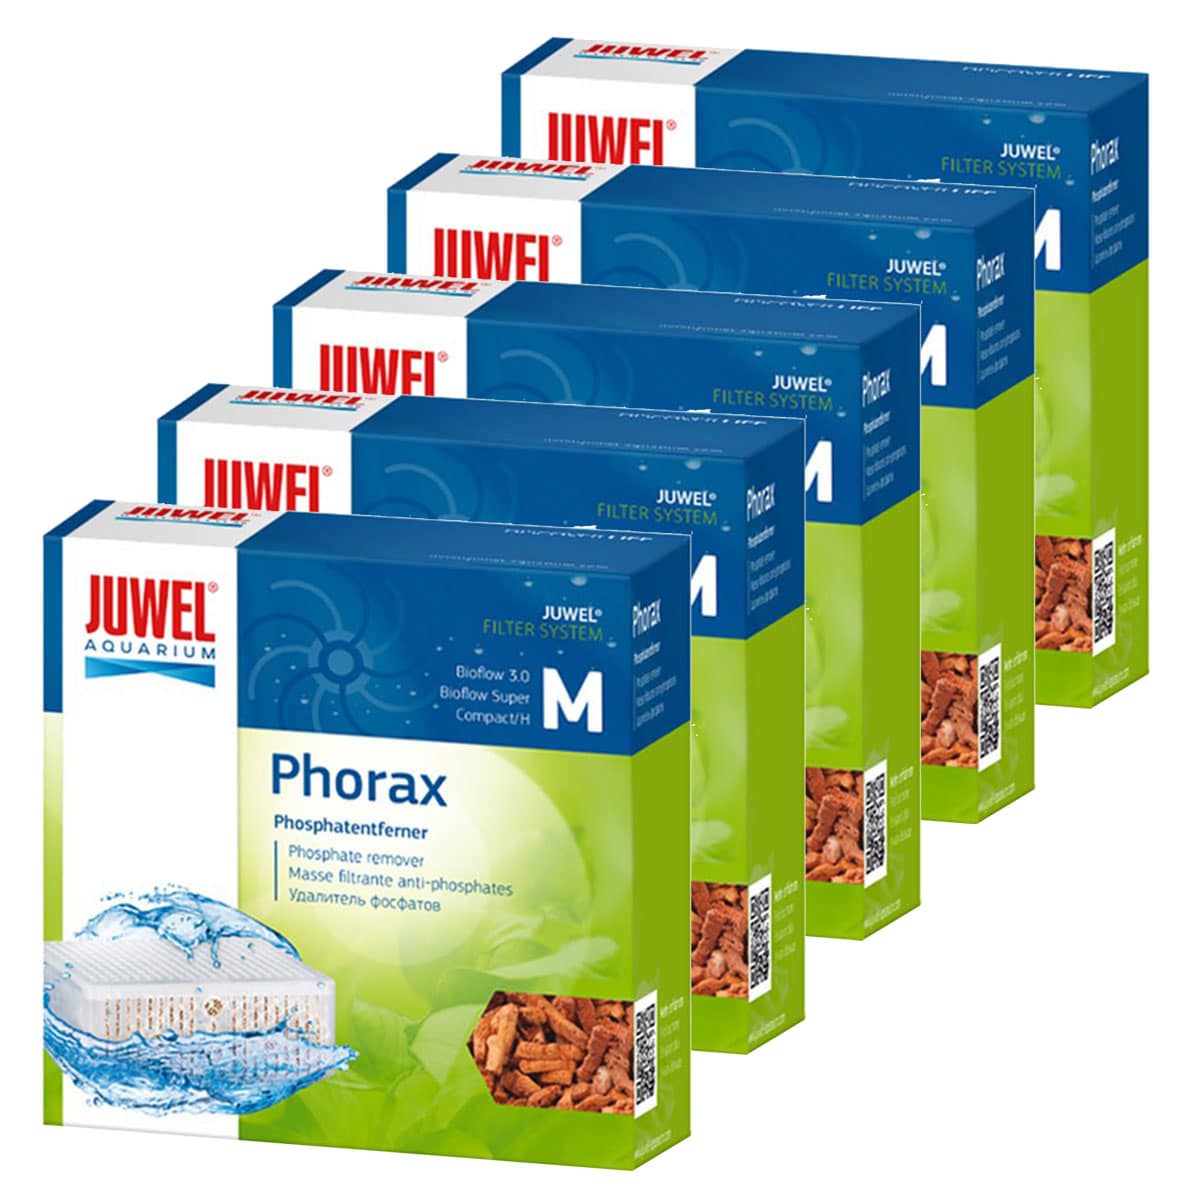 Juwel Filtermaterial Phorax Bioflow 5xBioflow 3.0-Compact